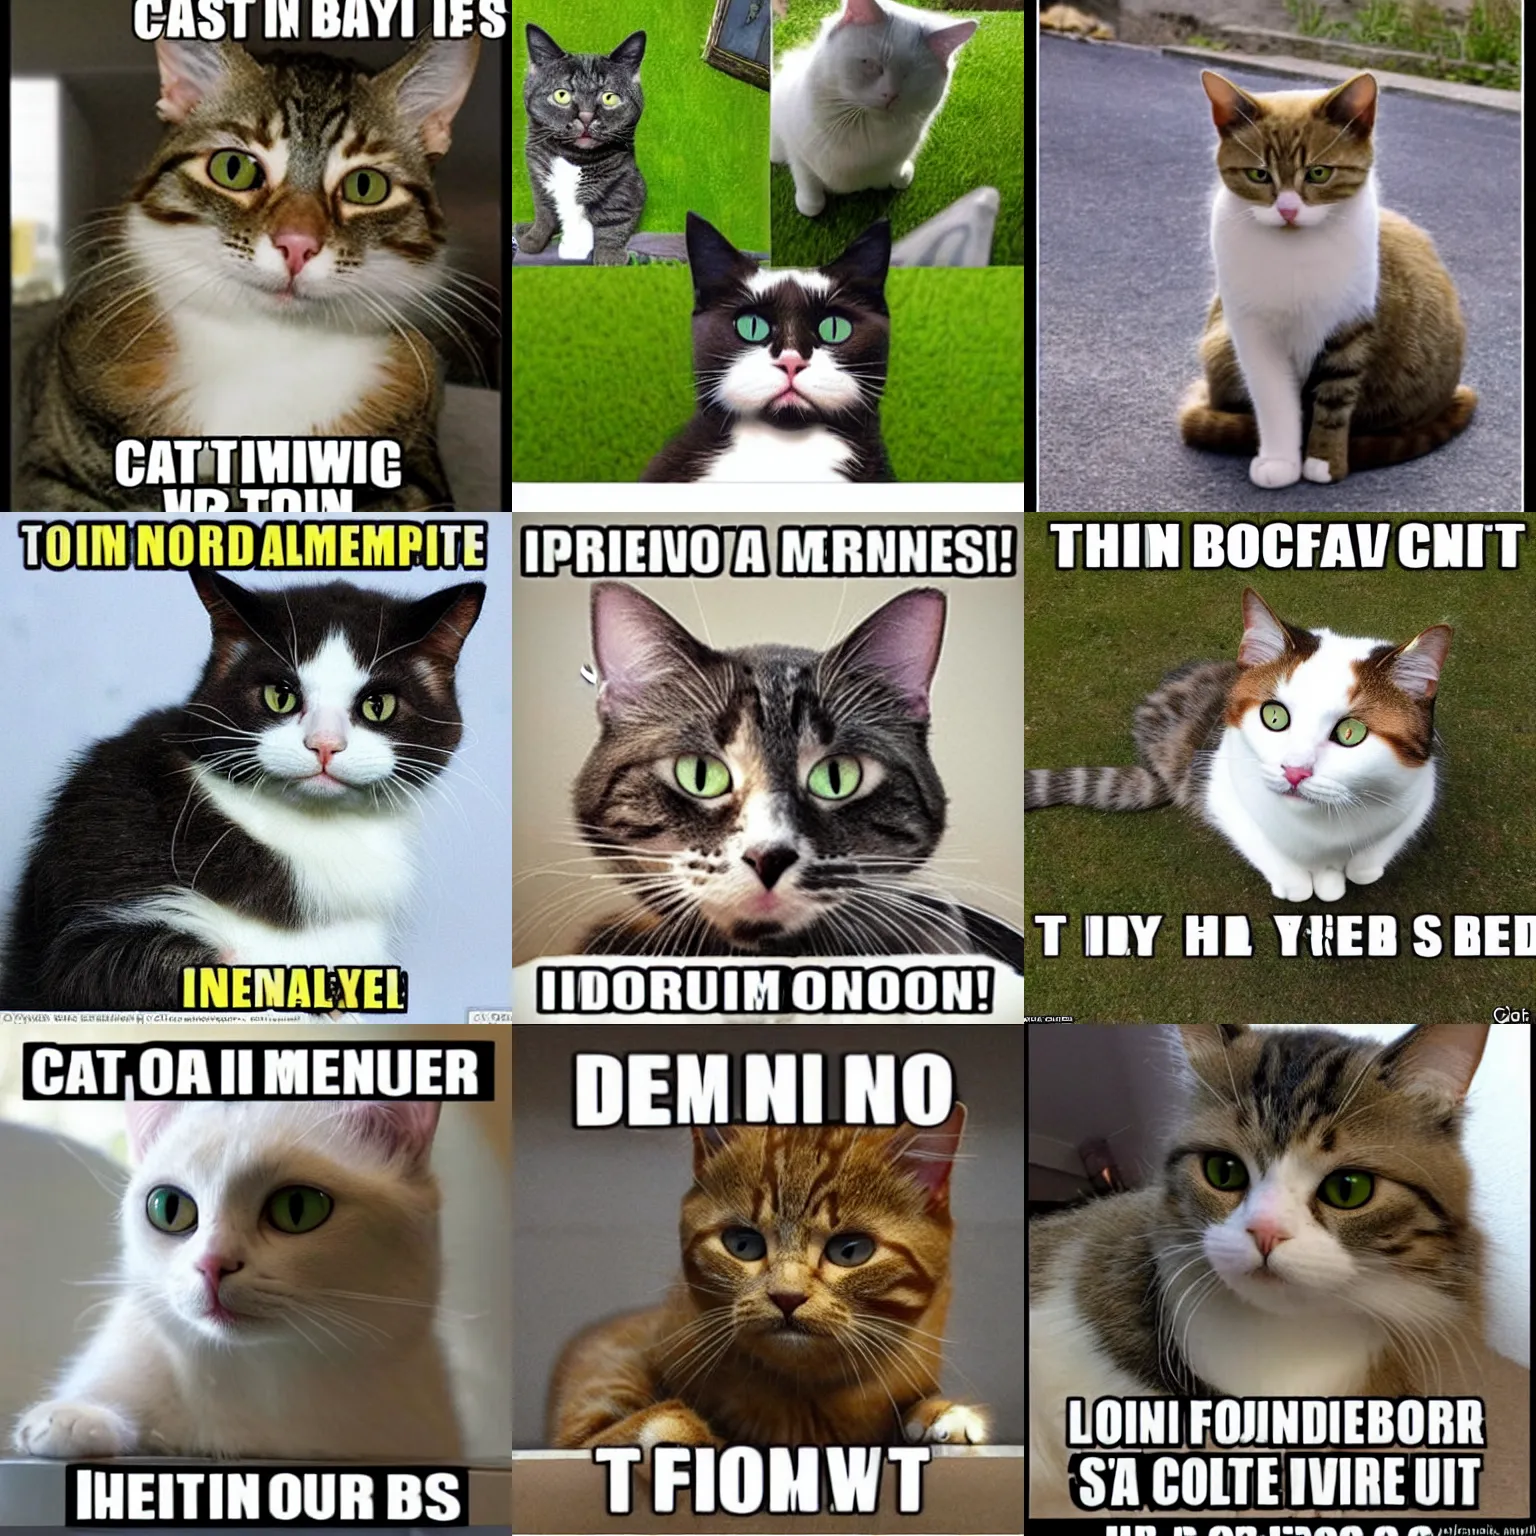 Prompt: cat from meme